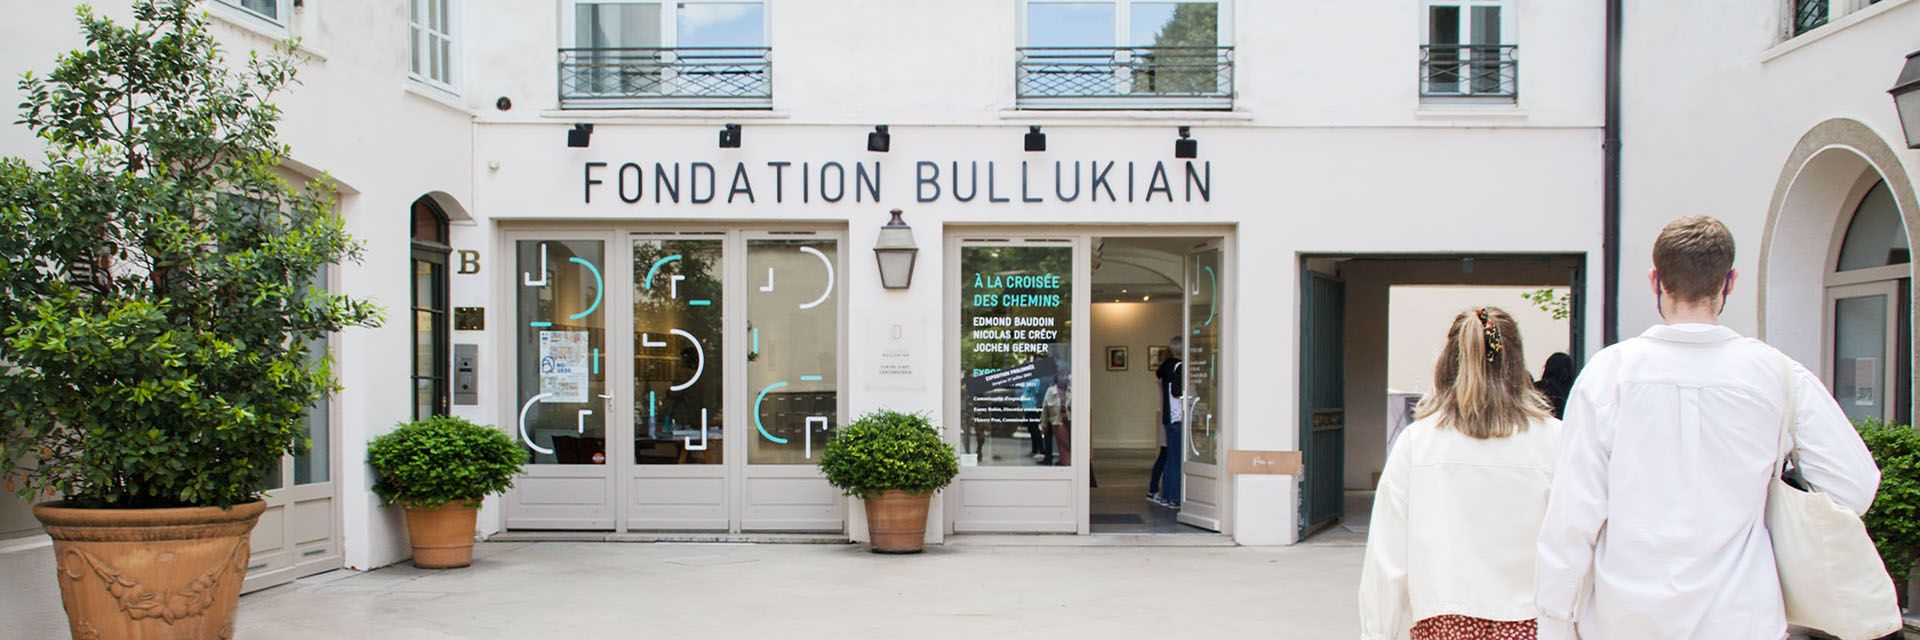 Fondazione Bullukian